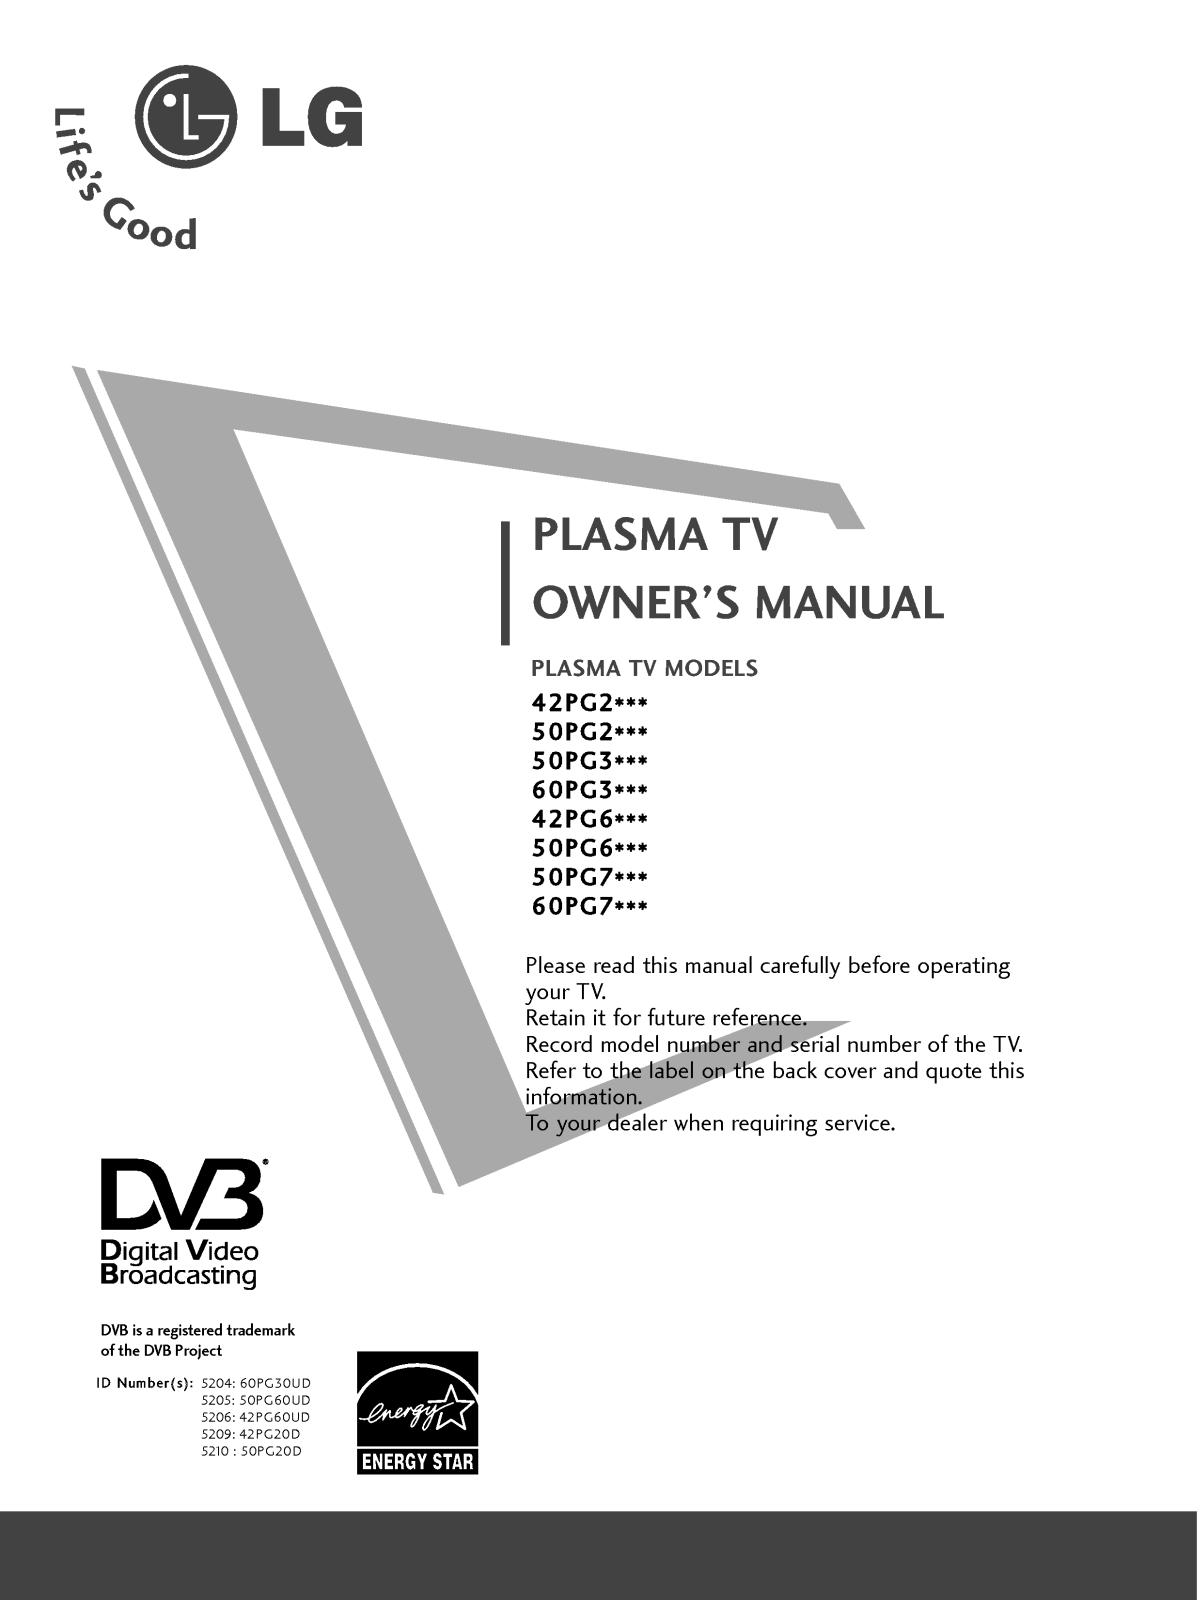 LG 42PG60UD, 50PG60UD User Manual